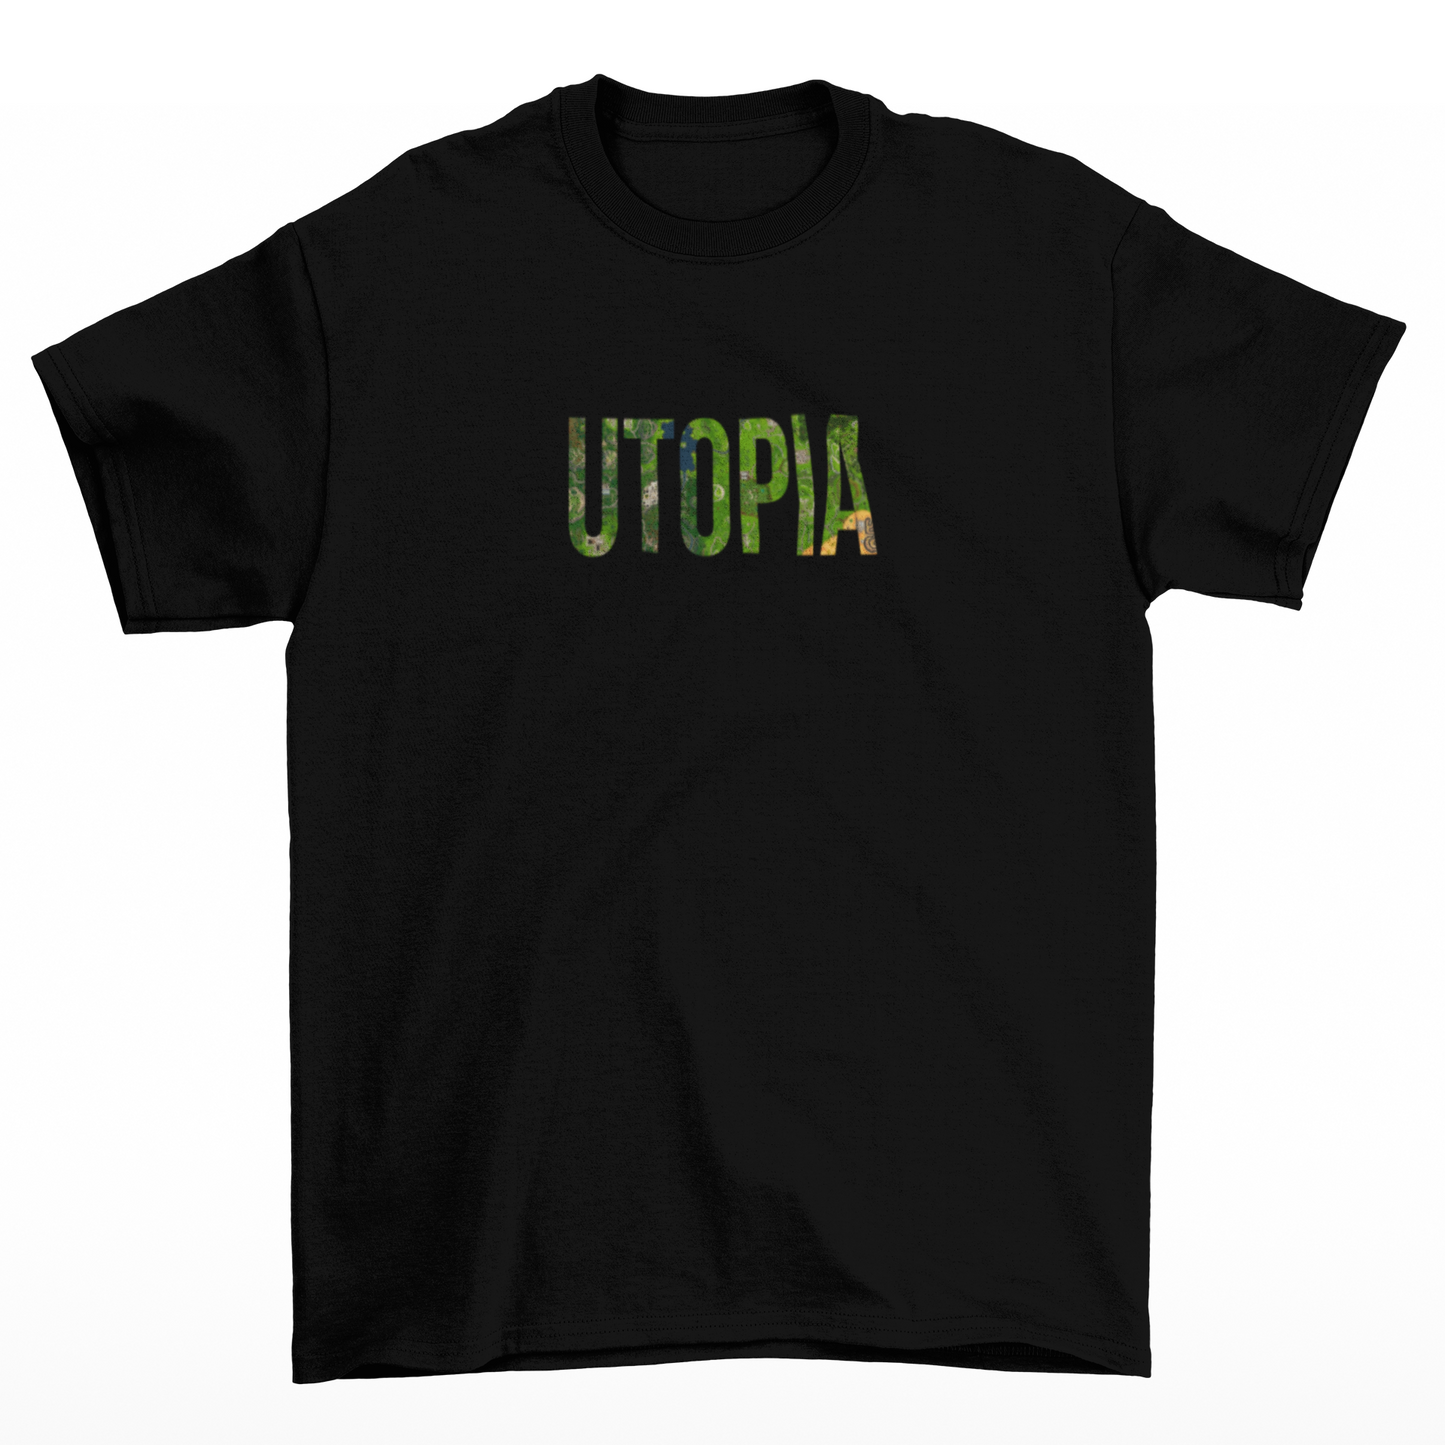 Fortnite Utopia Text Graphic Tee